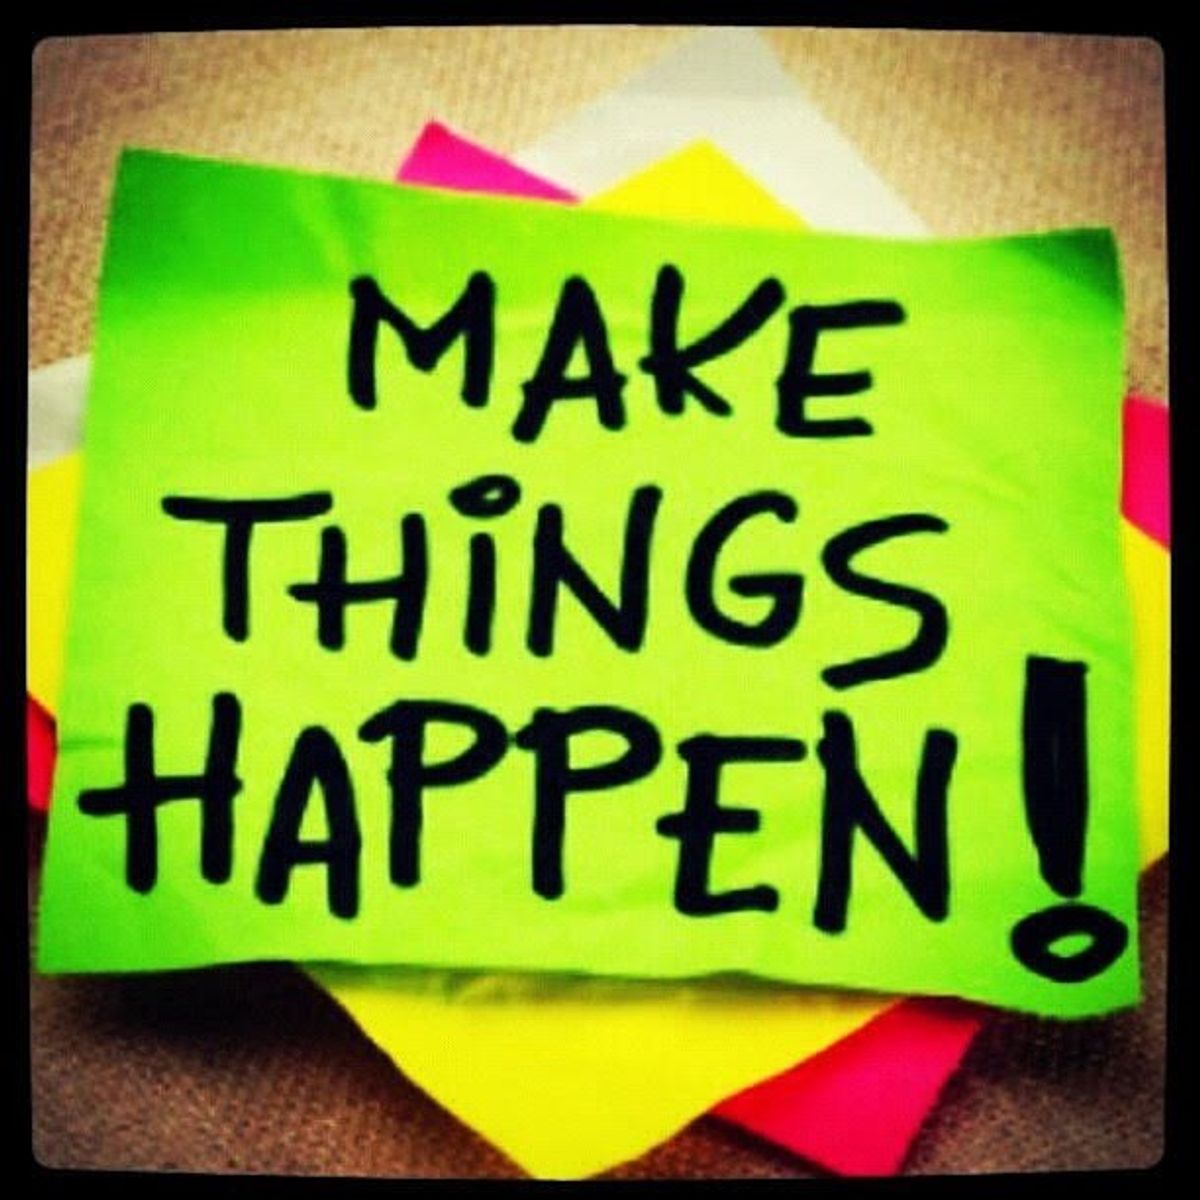 Make your happen. Make things happen. Things happen. Make things happen кепка. Картина с надписью make things happen.